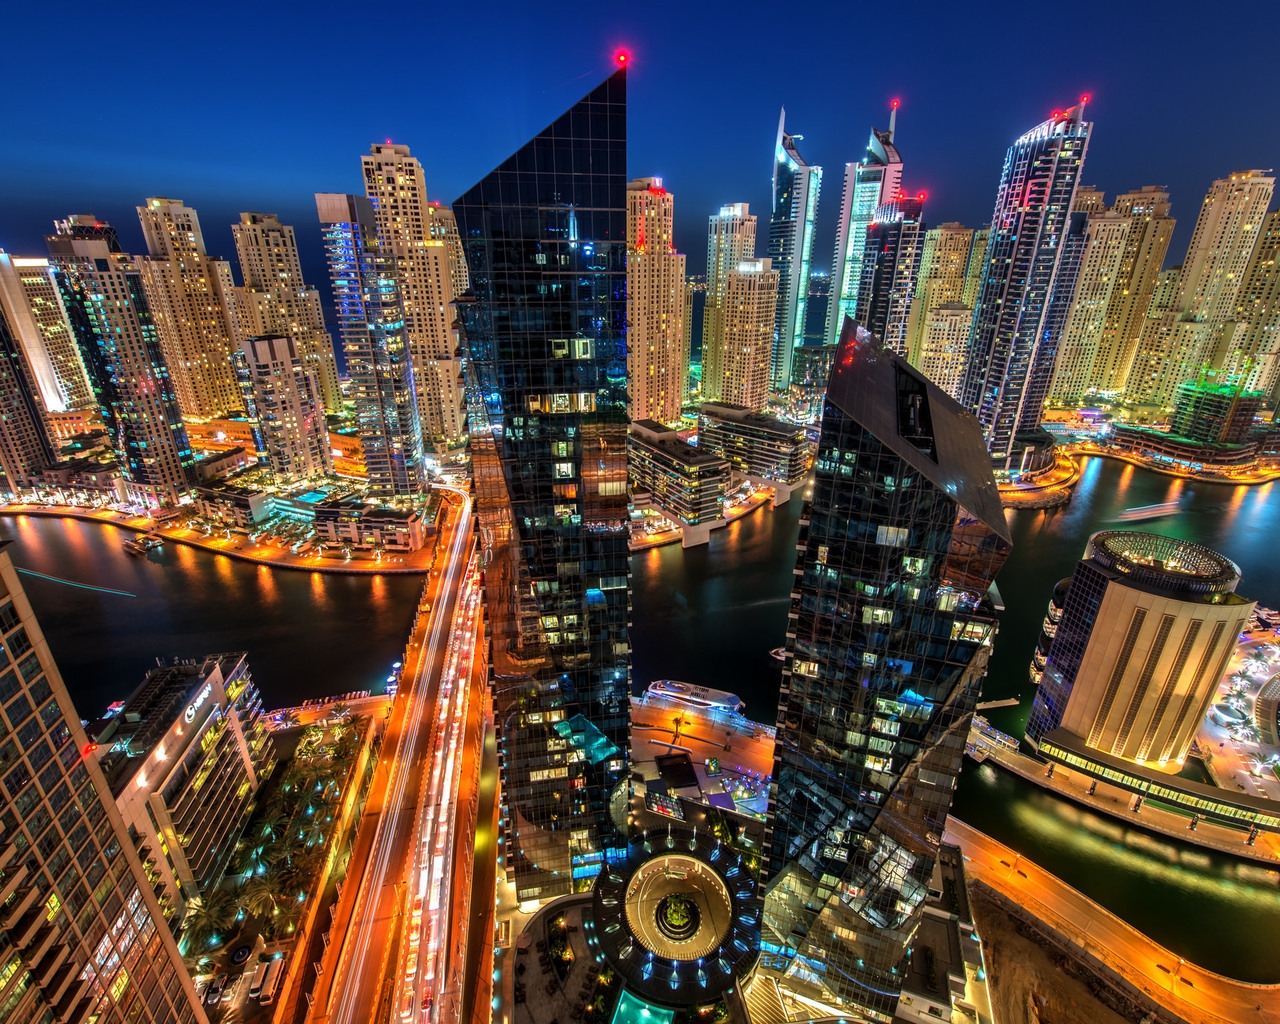 Night in Dubai for 1280 x 1024 resolution